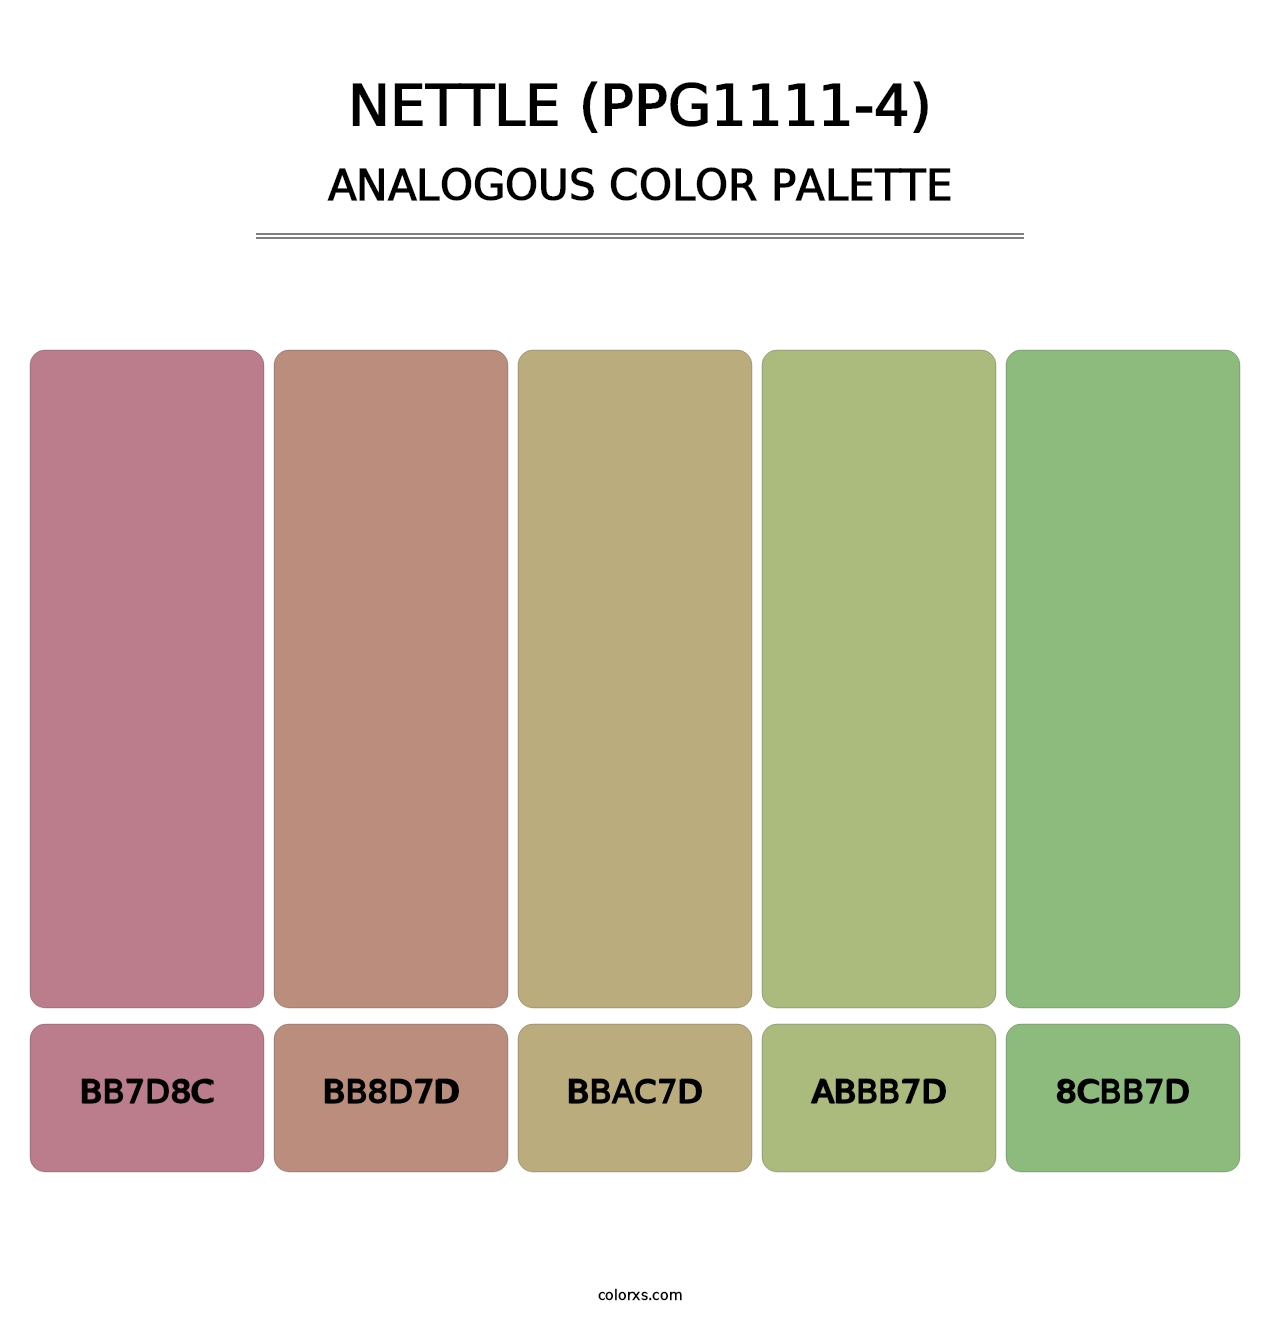 Nettle (PPG1111-4) - Analogous Color Palette